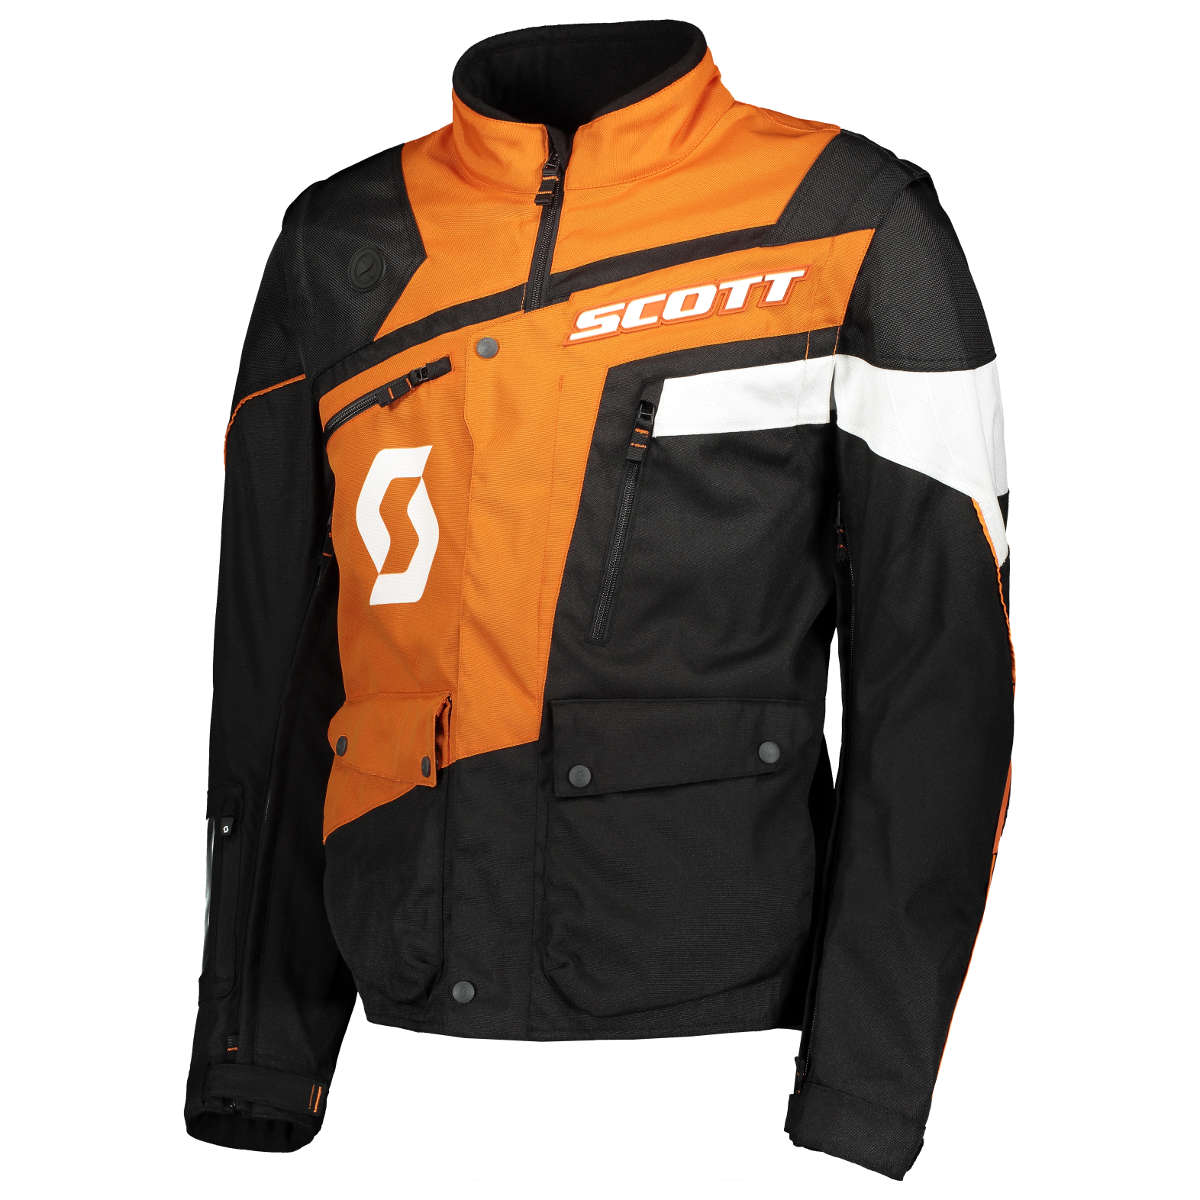 Scott Veste MX 350 Adventure Black/Orange